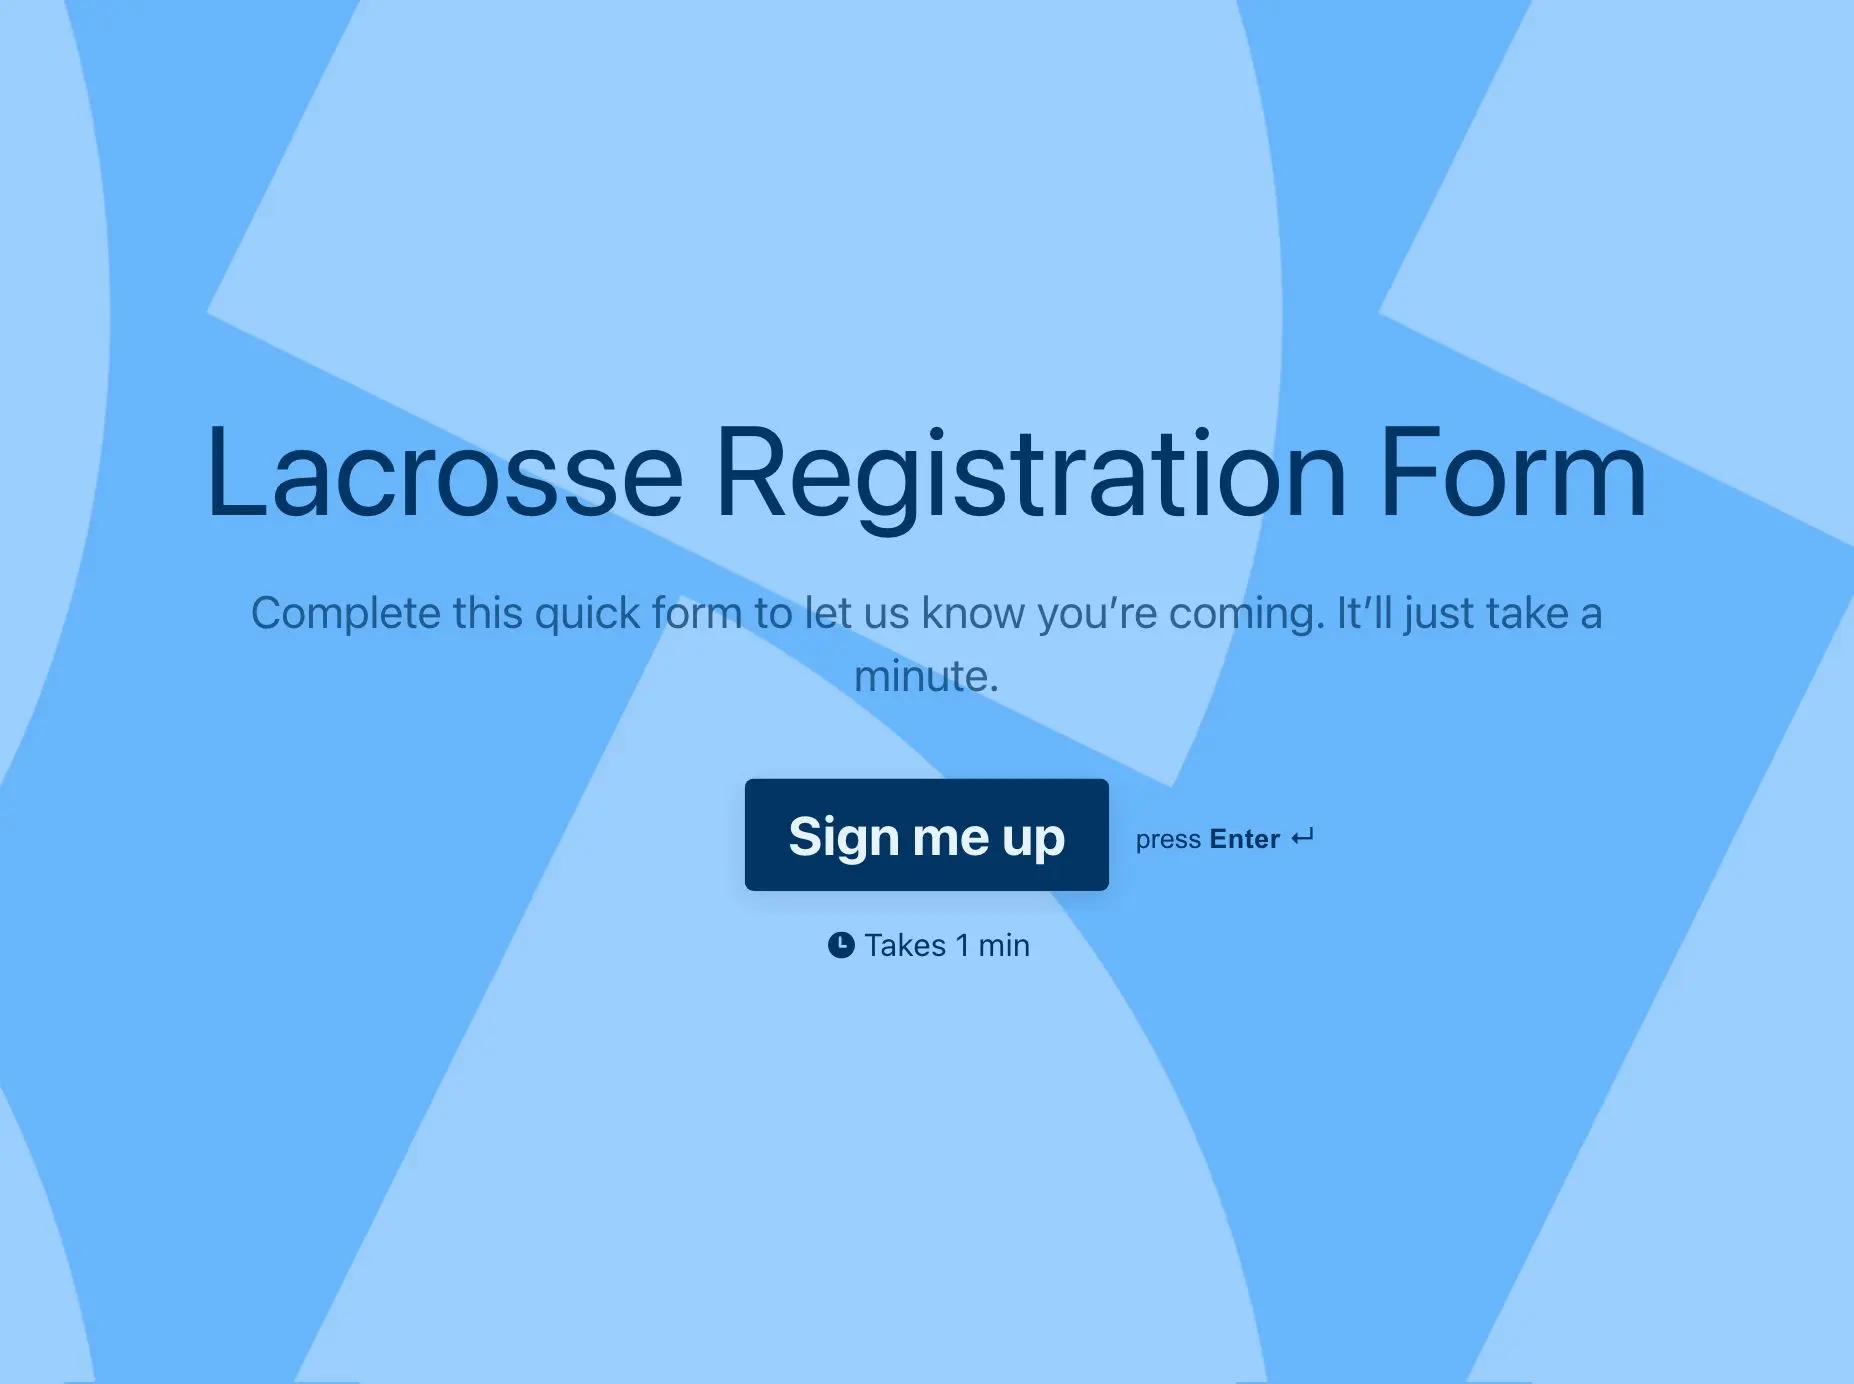 Lacrosse Registration Form Template Hero